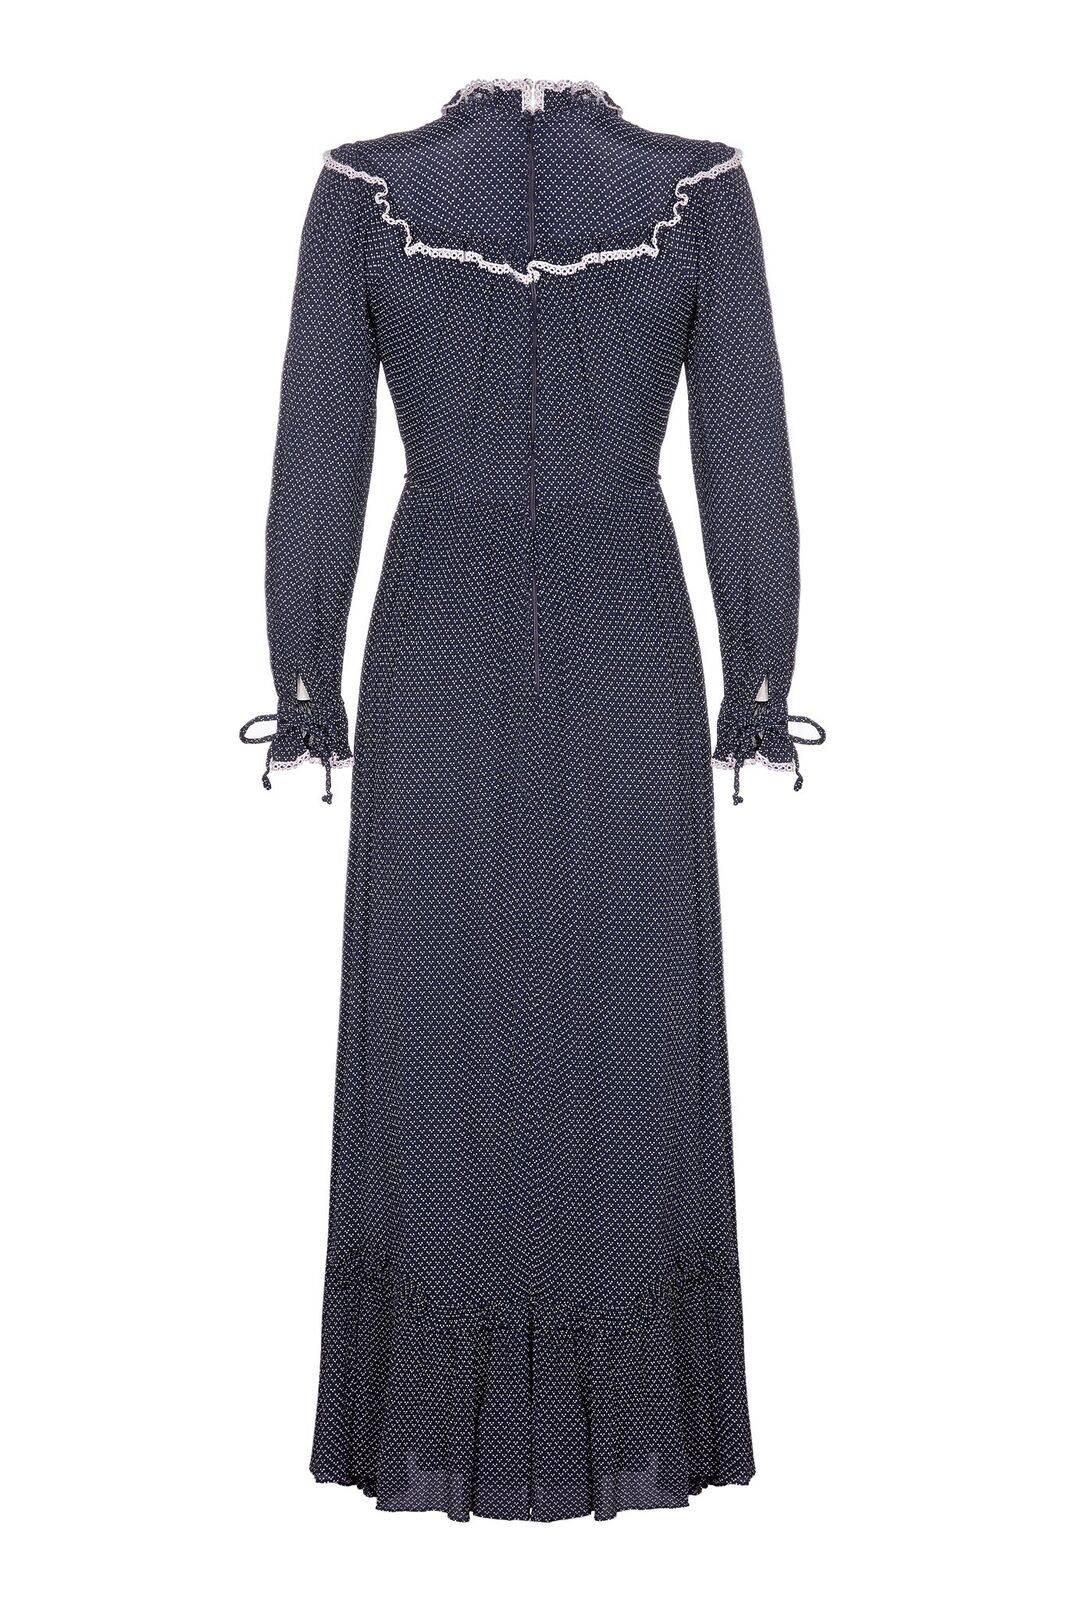 Vera Mont - For Sale on 1stDibs | vera mont dress, vera mont clothing, vera  mont paris